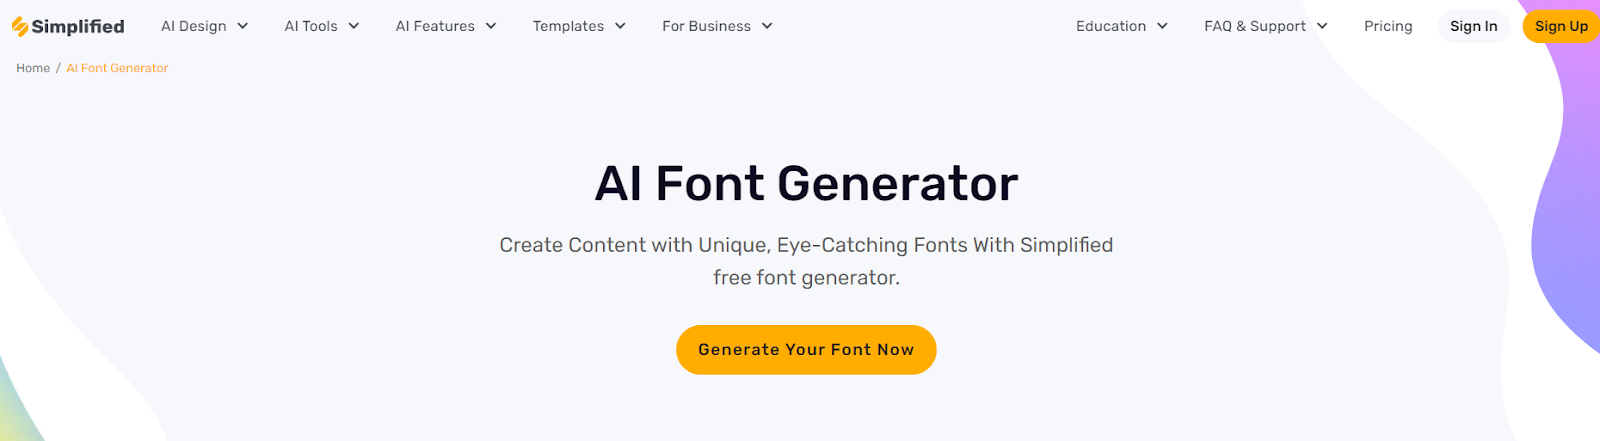 Simplified's AI Font Generator